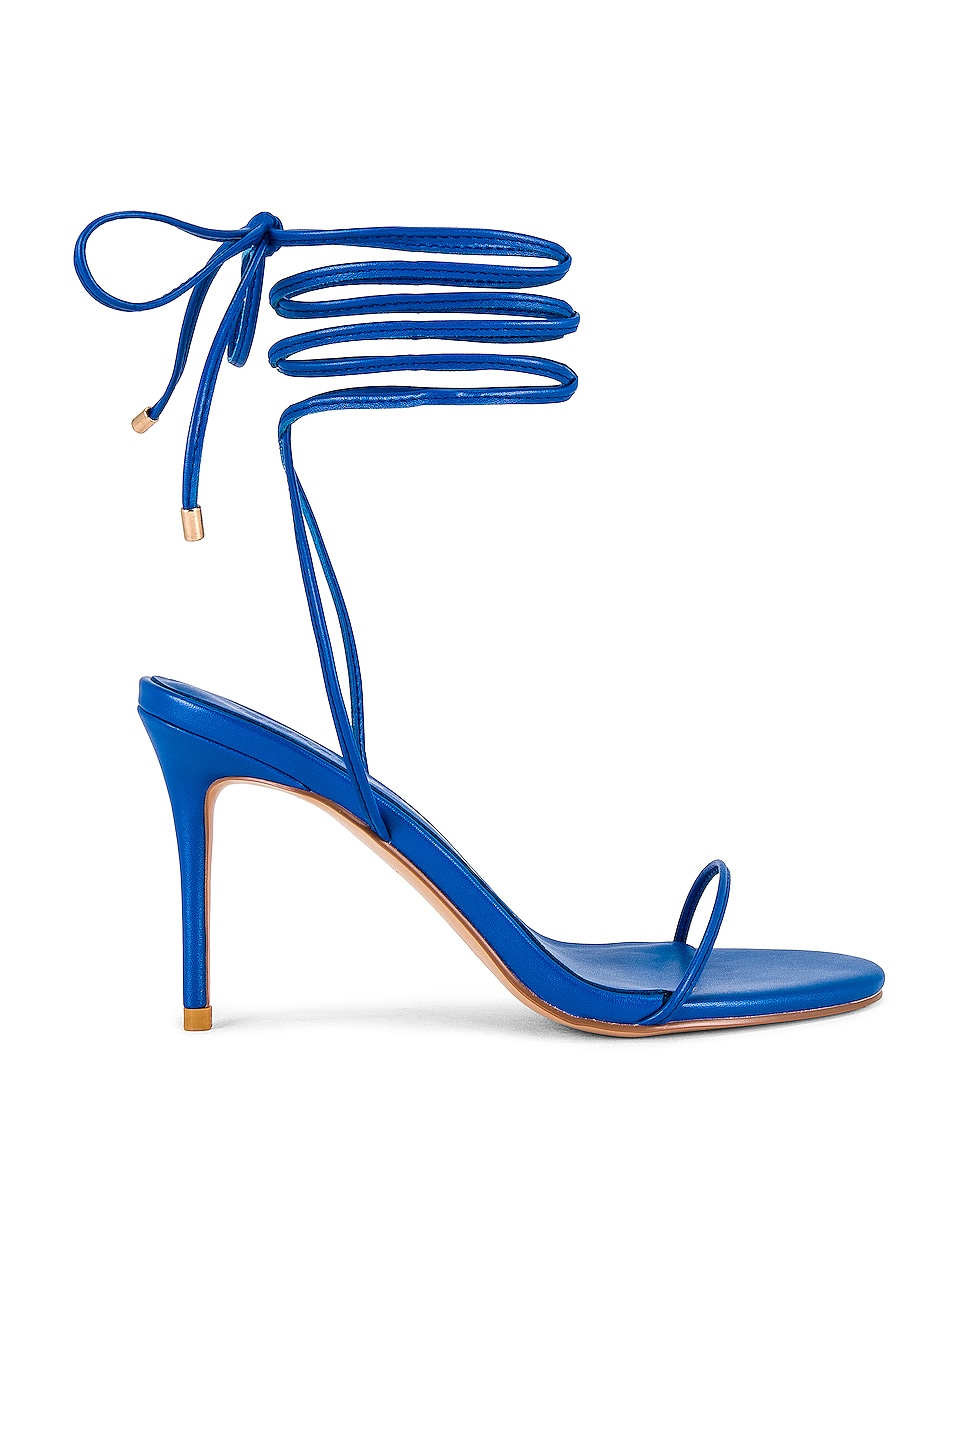 Royal blue lace up heels